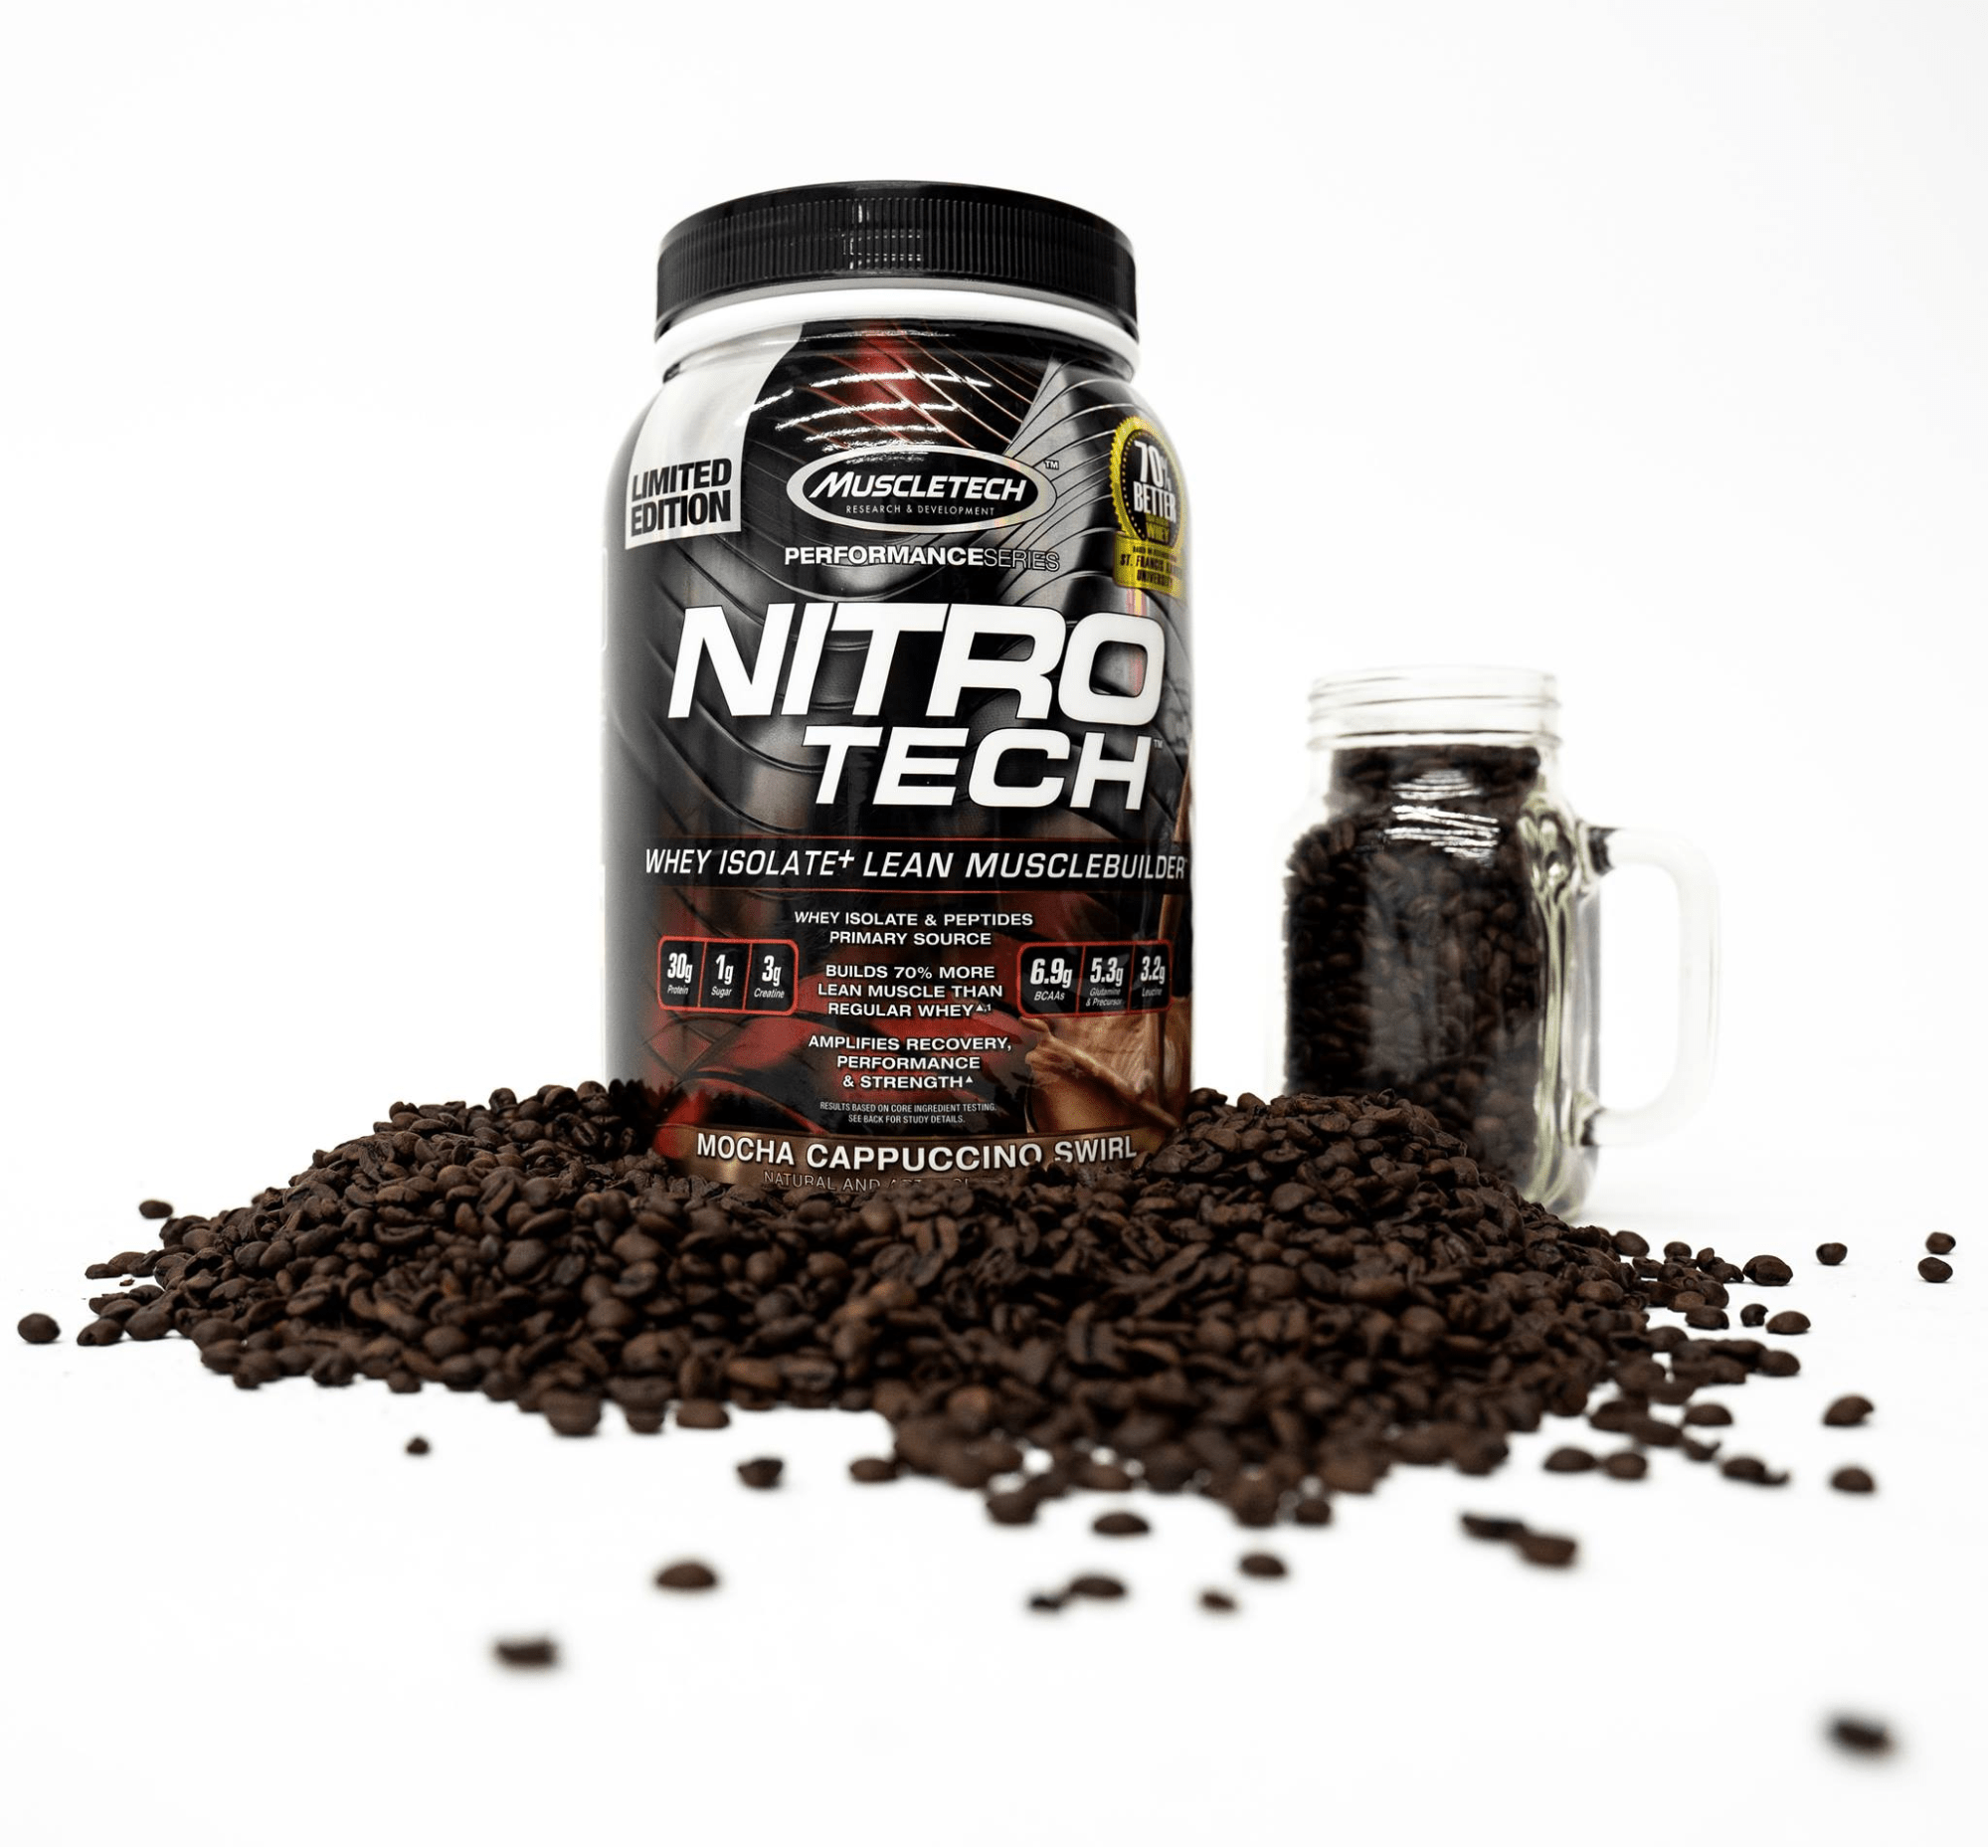 muscletech nitro tech has 30g of protein per scoop